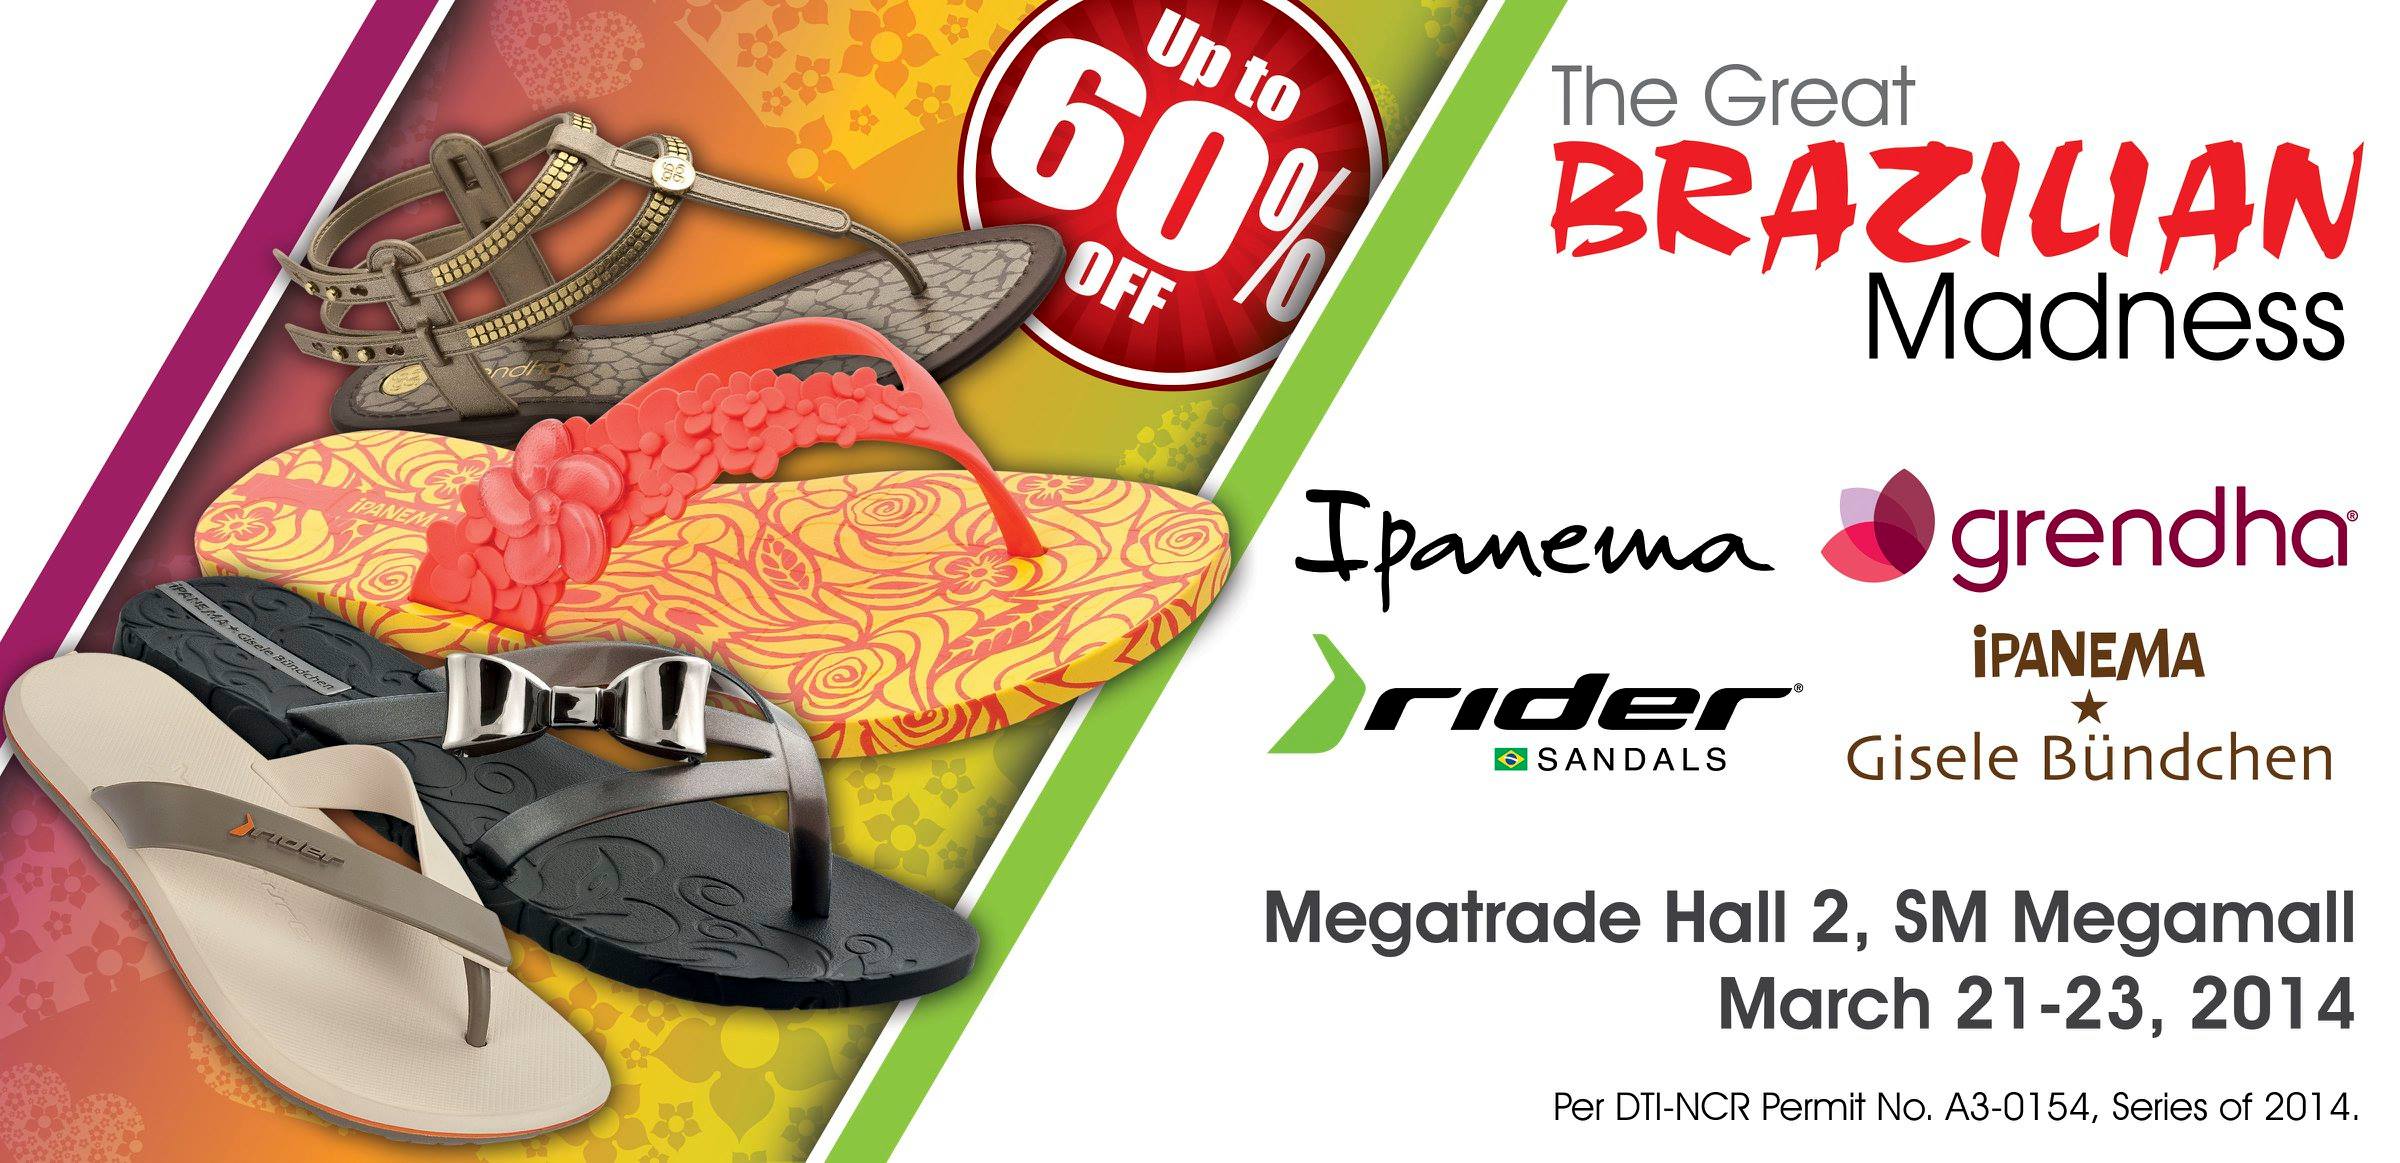 The Great Brazilian Madness @ SM Megatrade Hall March 2014